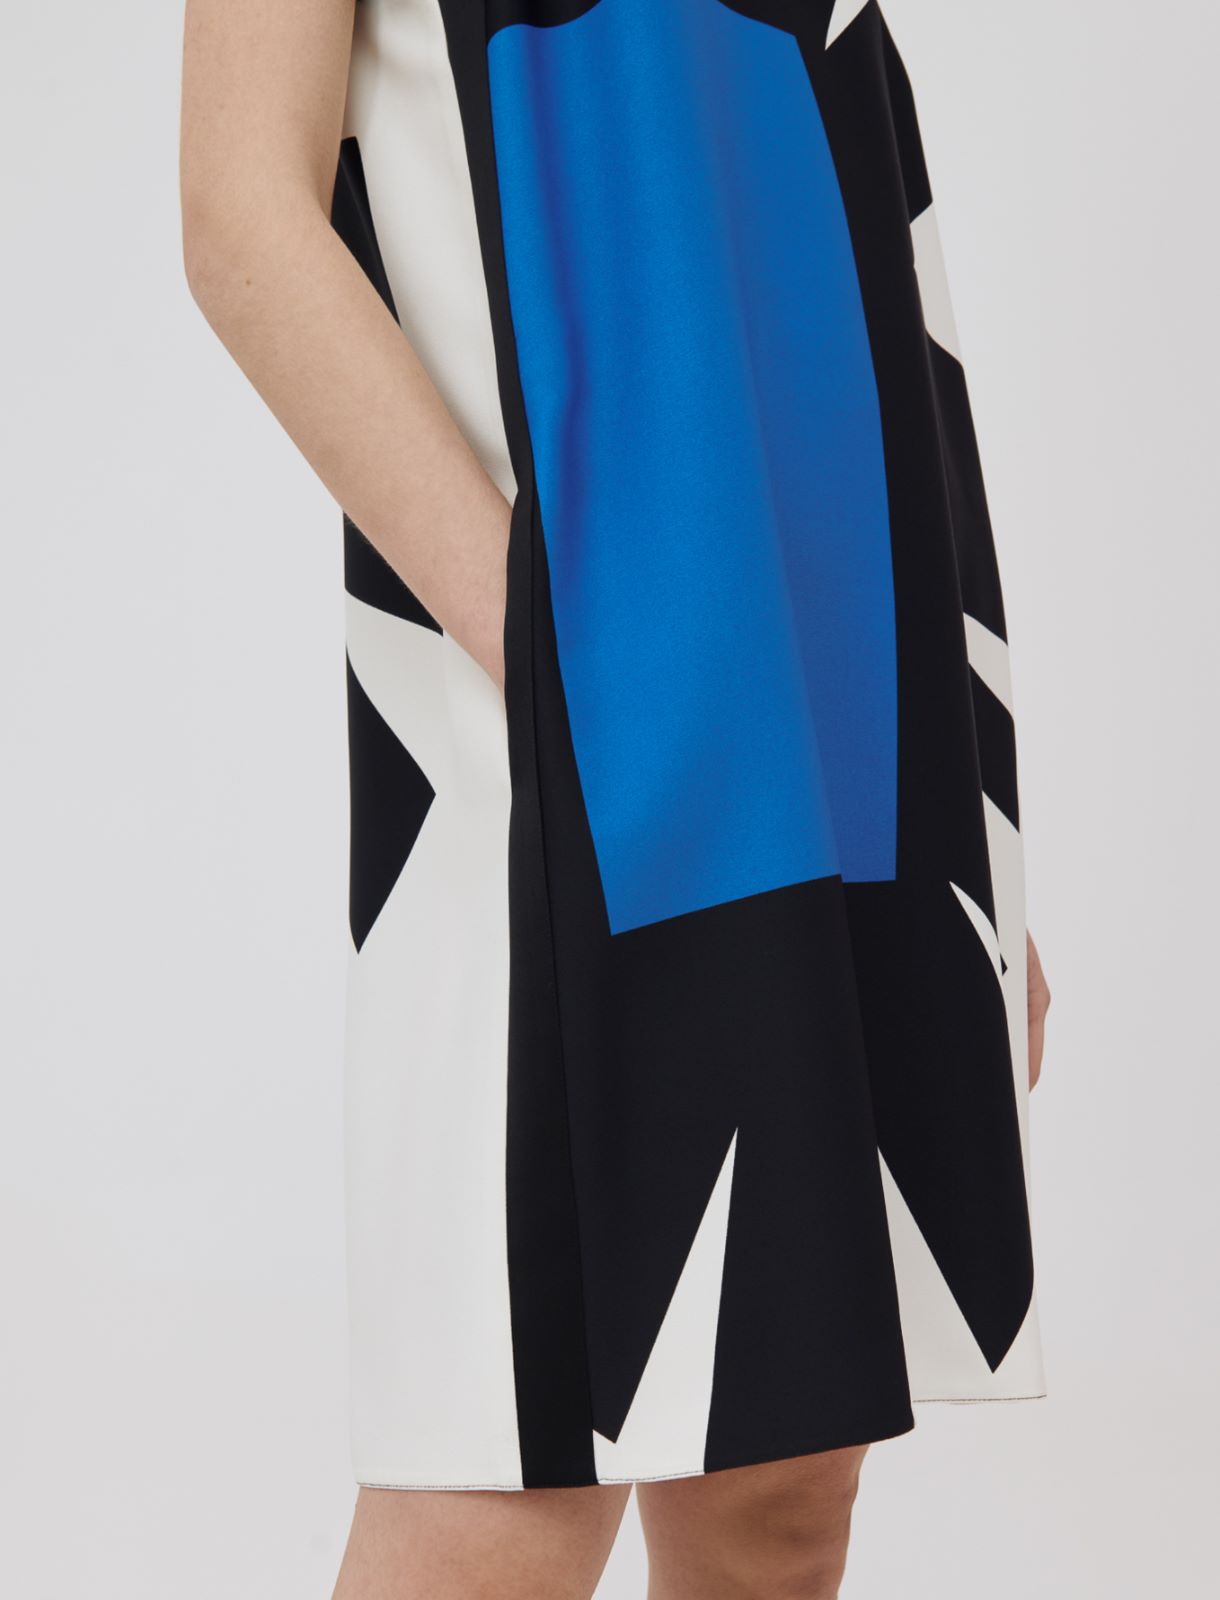 Patterned dress - Cornflower blue - Marina Rinaldi - 5